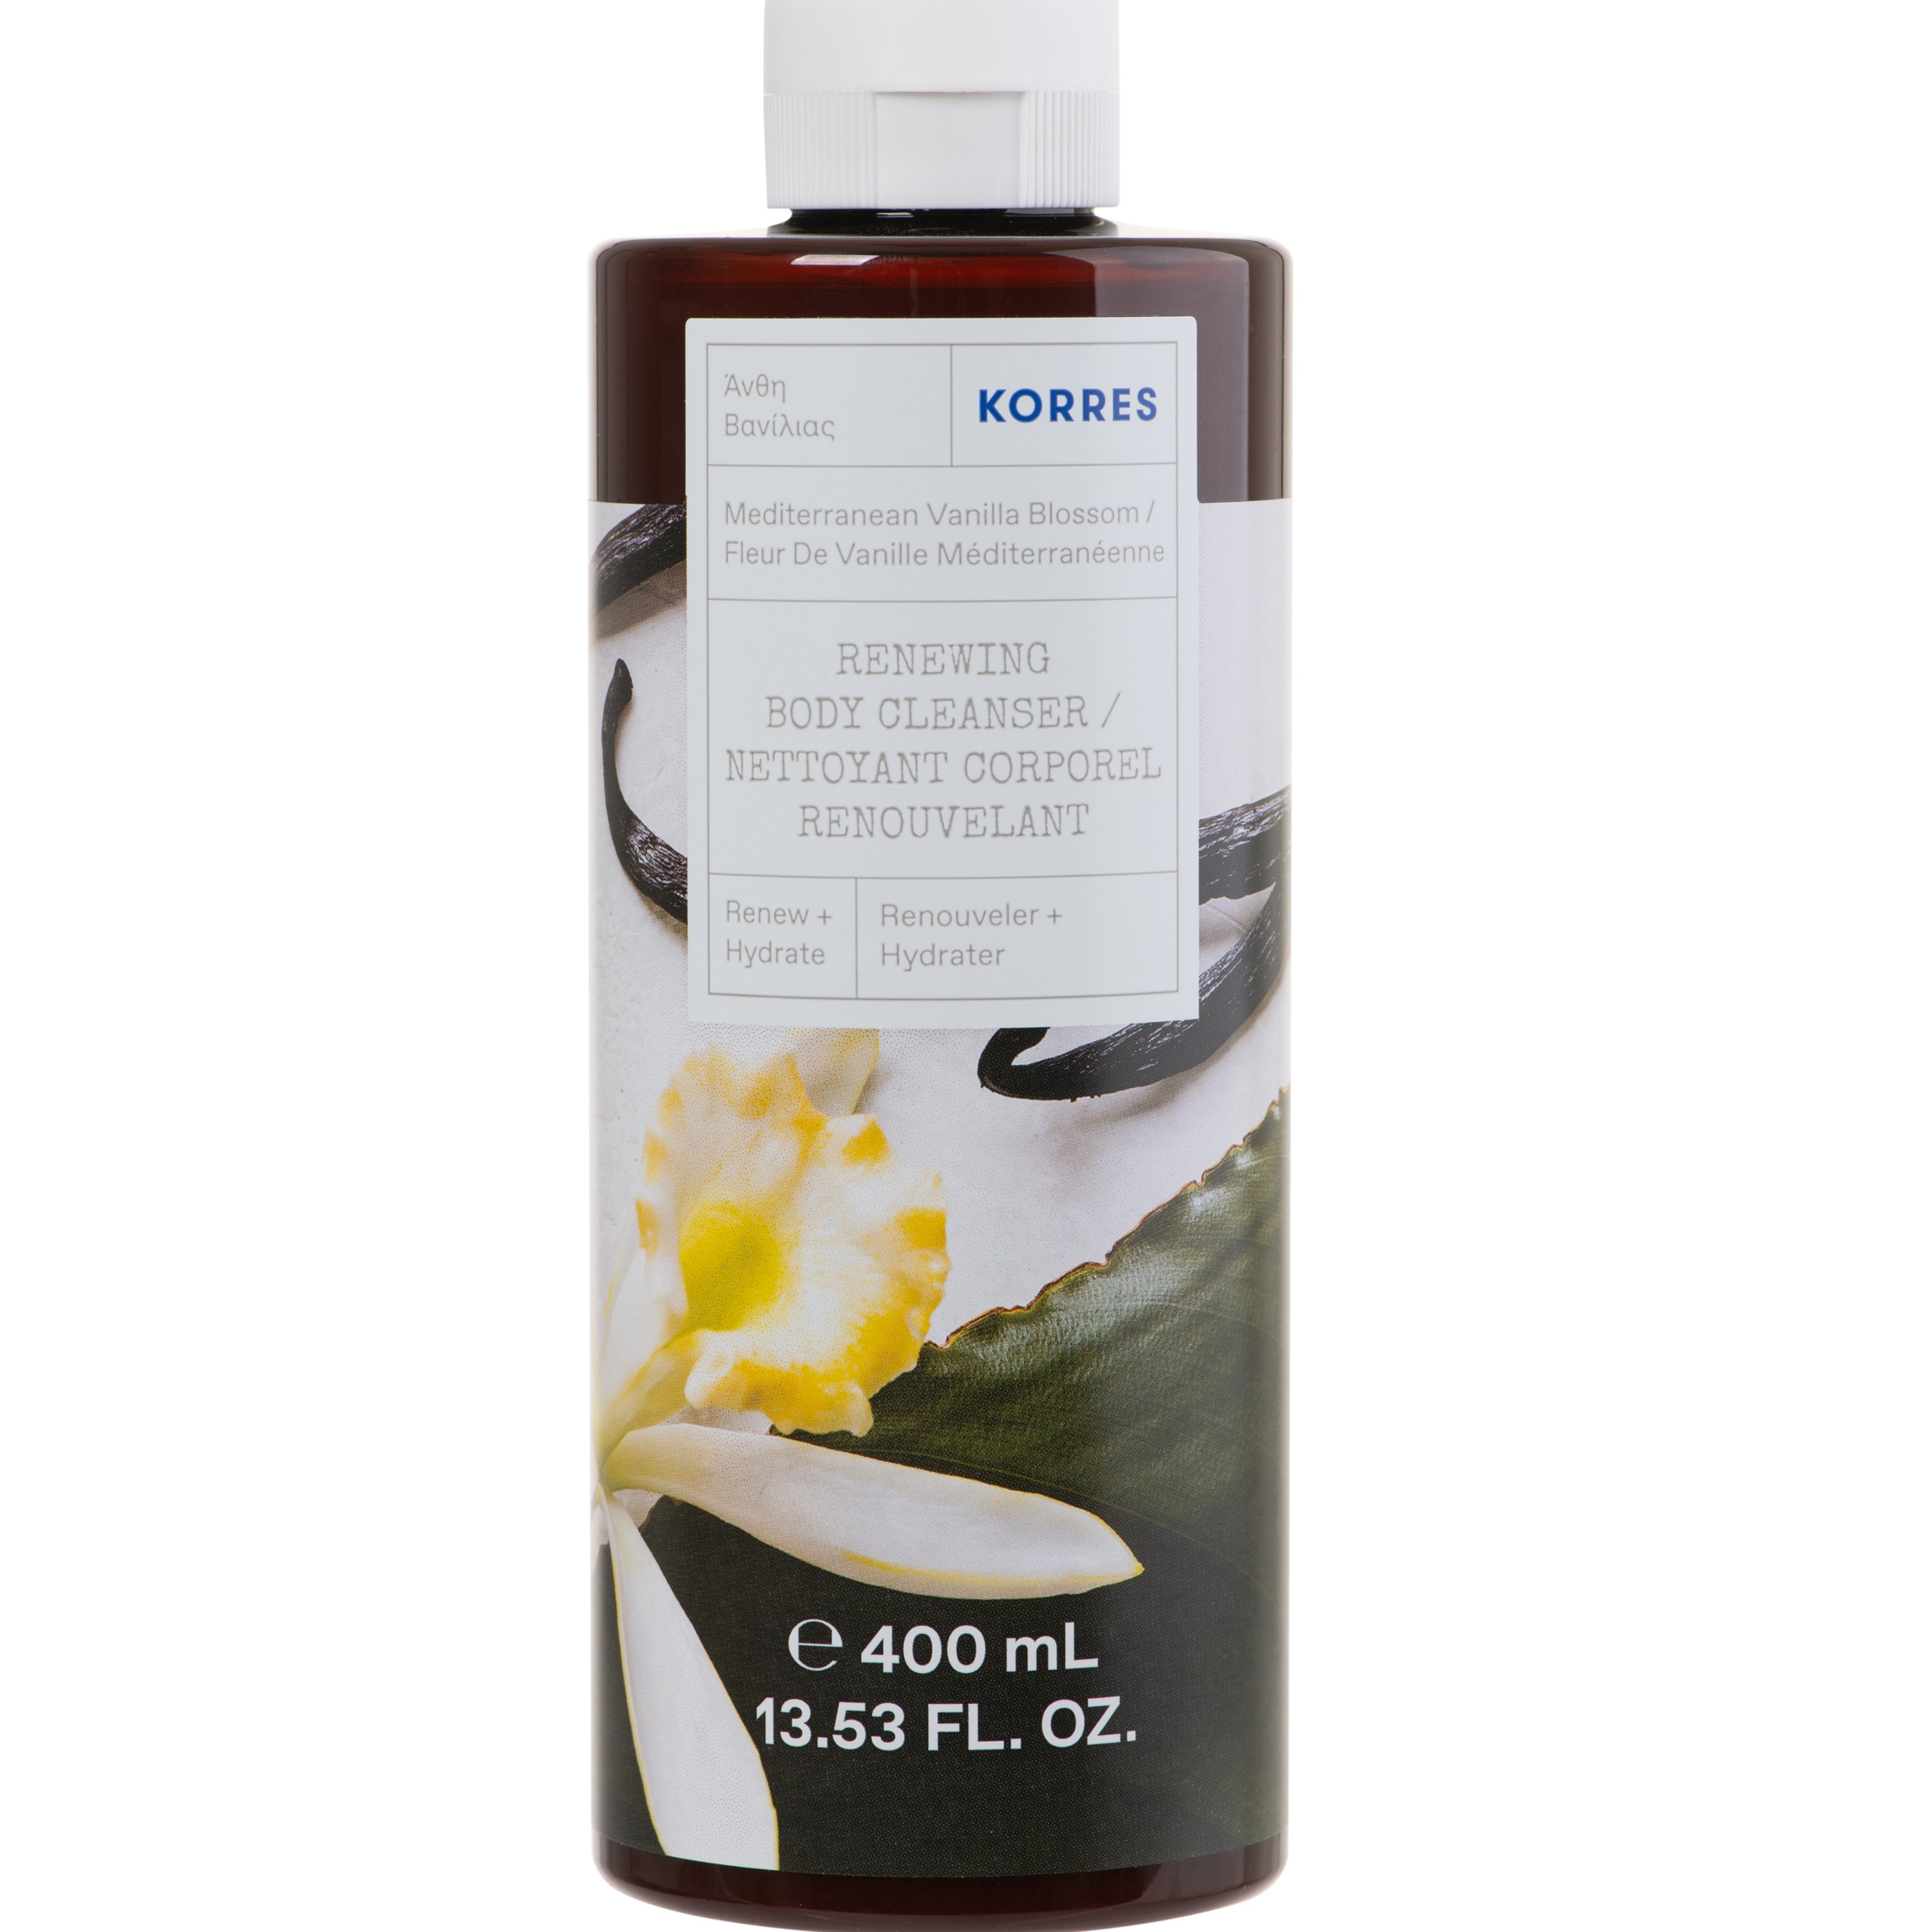 Korres Renewing Body Cleanser Mediterranean Vanilla Blossom Shower Gel Αναζωογονητικό, Ενυδατικό Αφρόλουτρο με Ιδιαίτερο Άρωμα Βανίλιας & Απαλές Νότες από Λευκά Άνθη 400ml